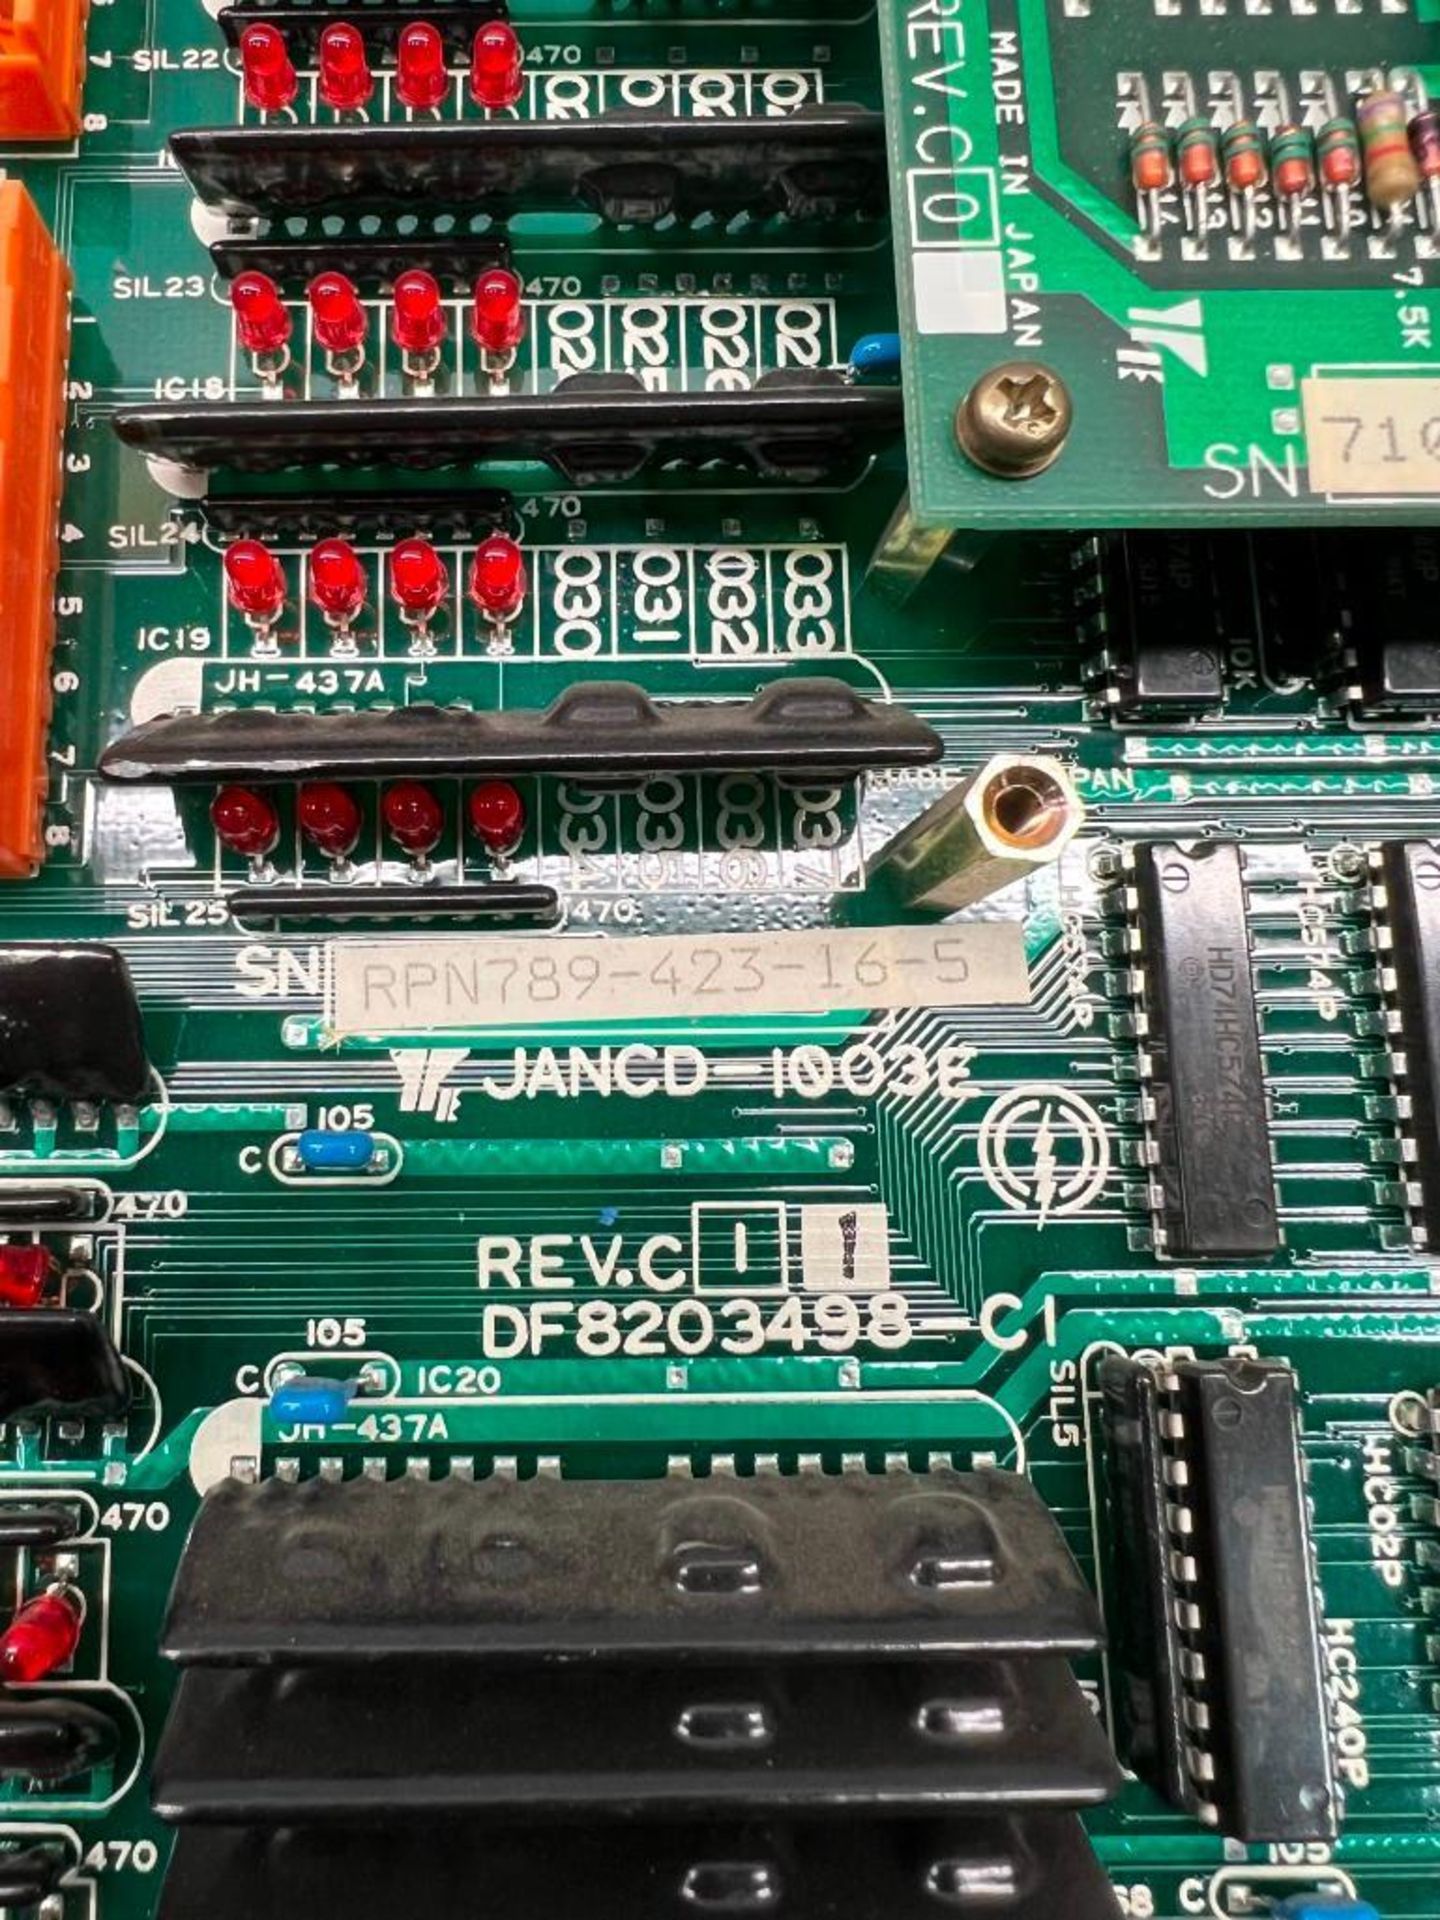 Yaskawa #JANCD-1O03E Rev. CI1 DF8203498-CI Circuit Board - Bild 3 aus 3